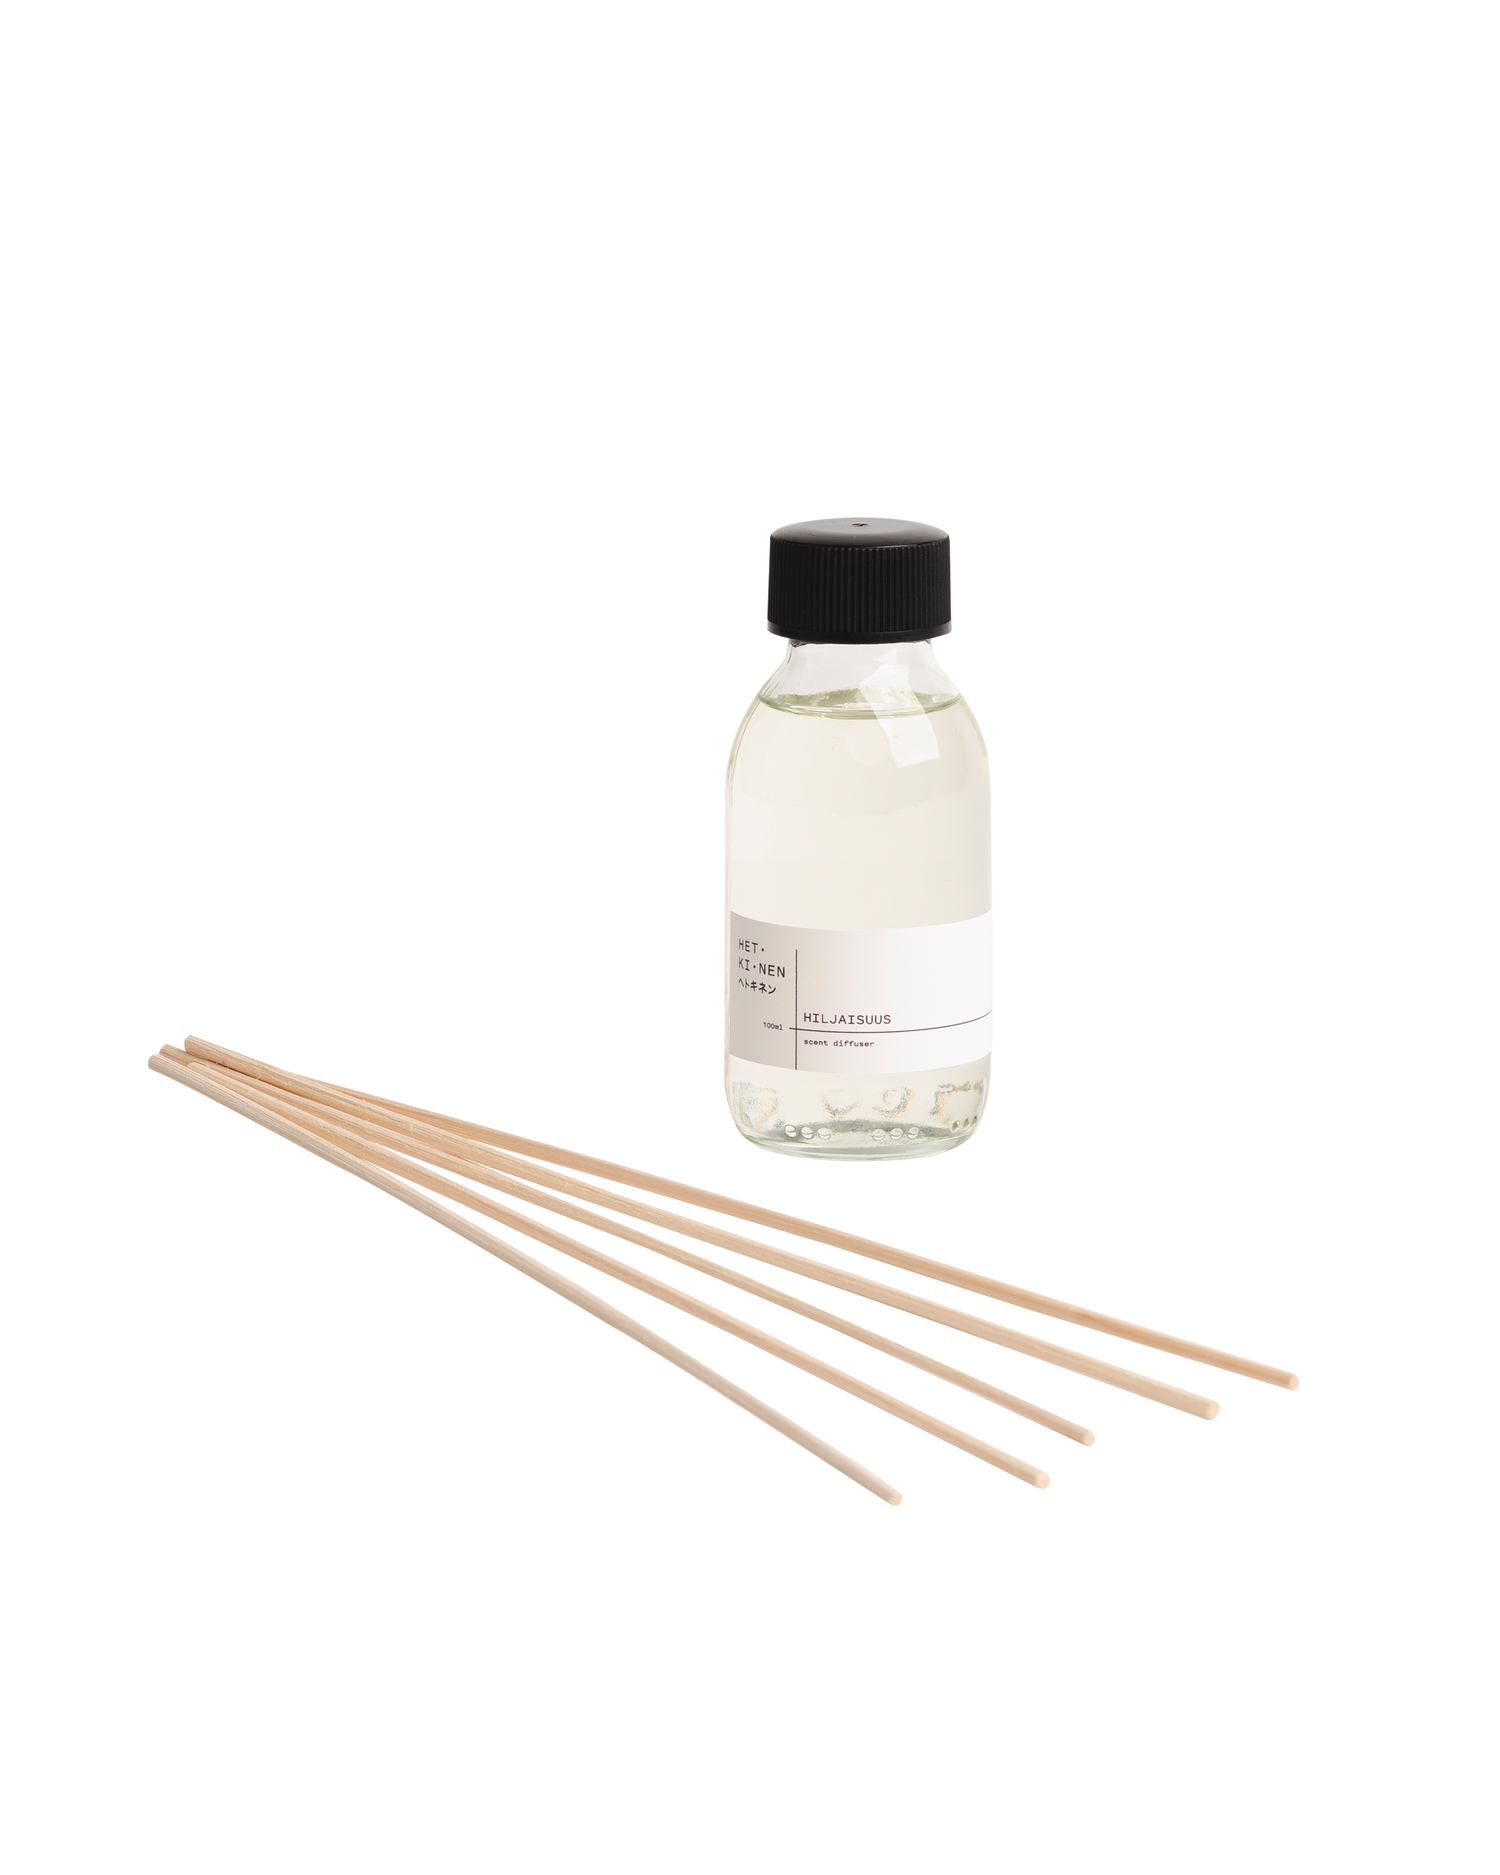 pine diffuser fragrance hiljaisuus 100ml refill